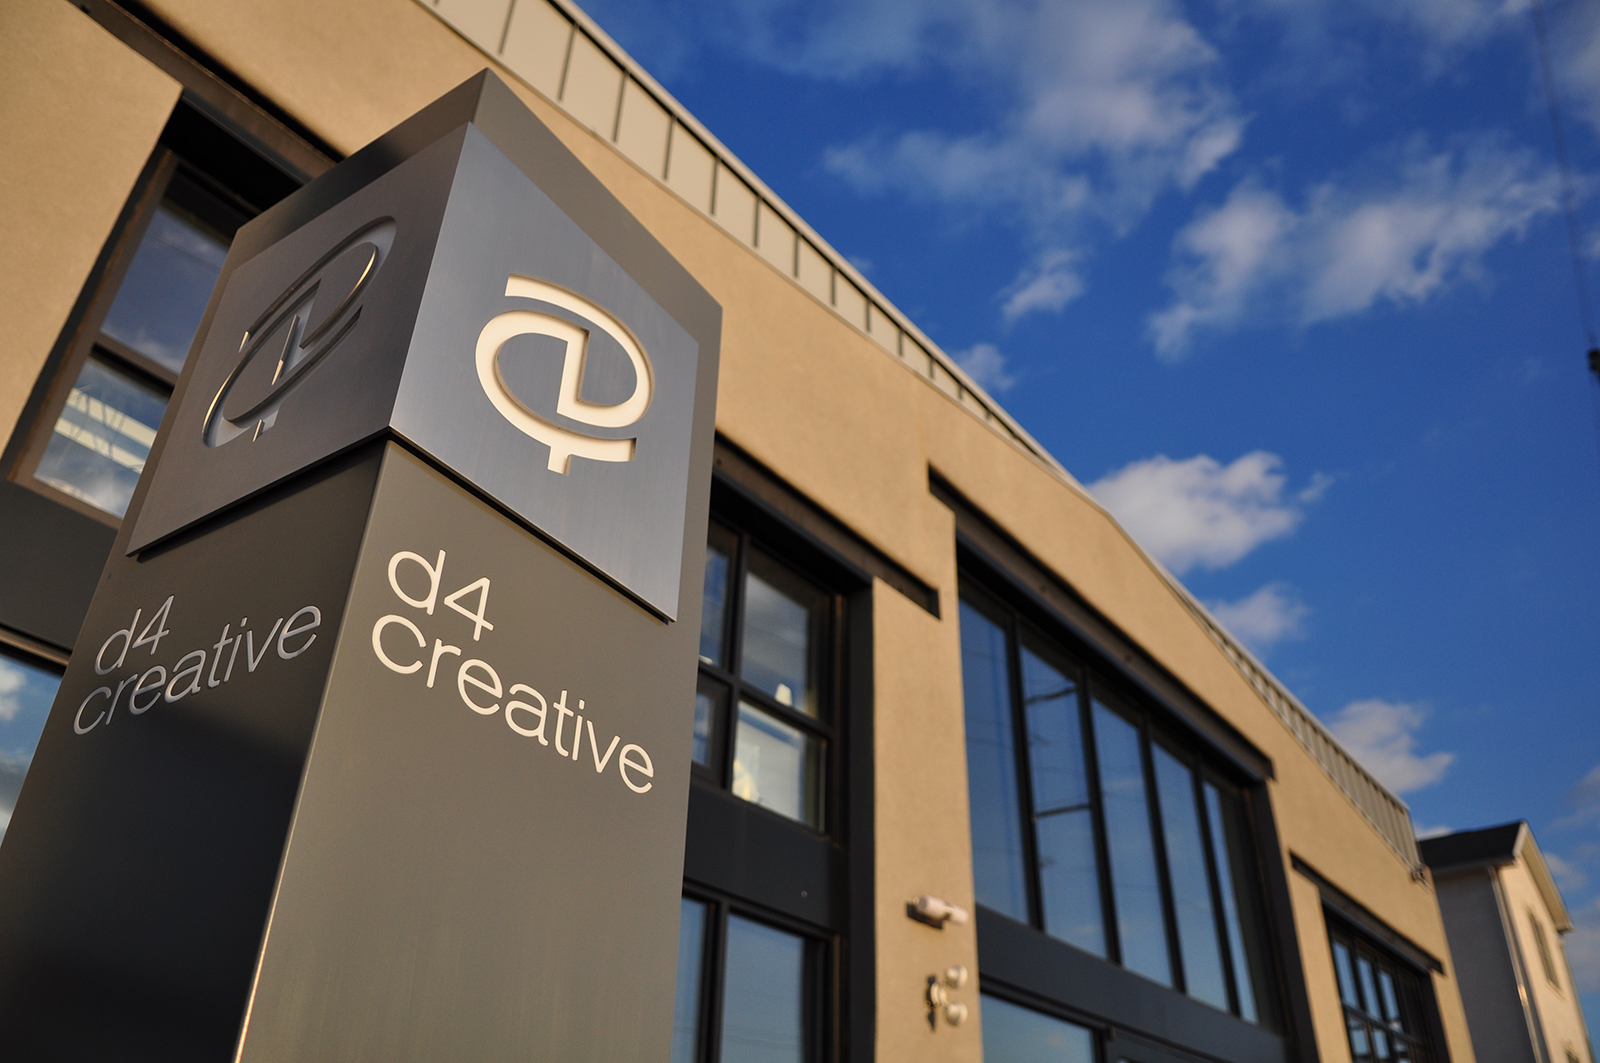 D4 Creative Group, Philadelphia